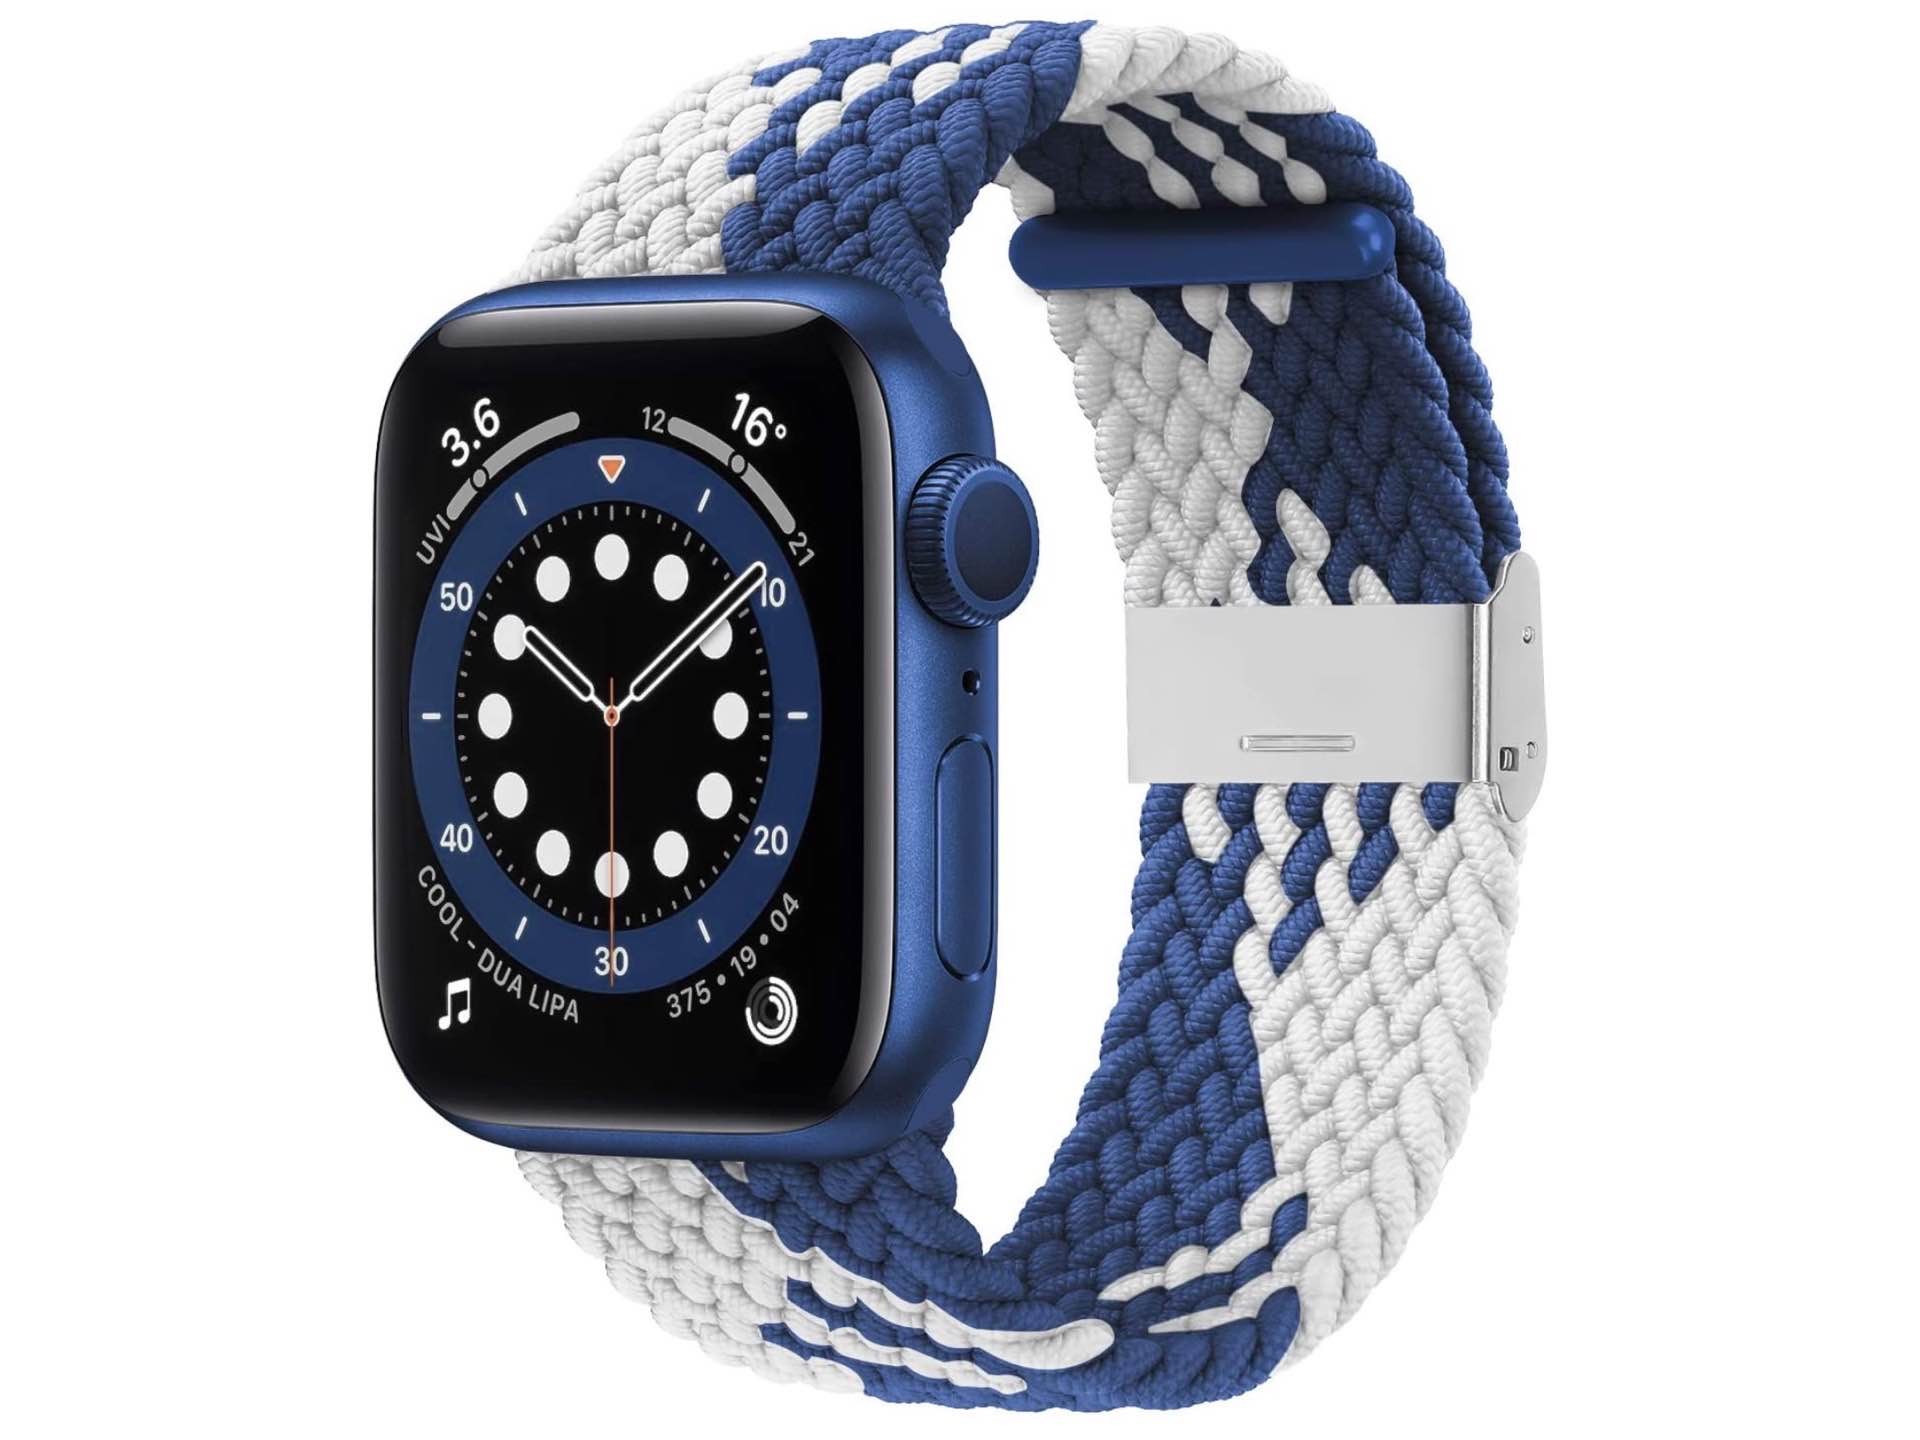 Bagoplus elastic braided solo loop band for Apple Watch. ($12)